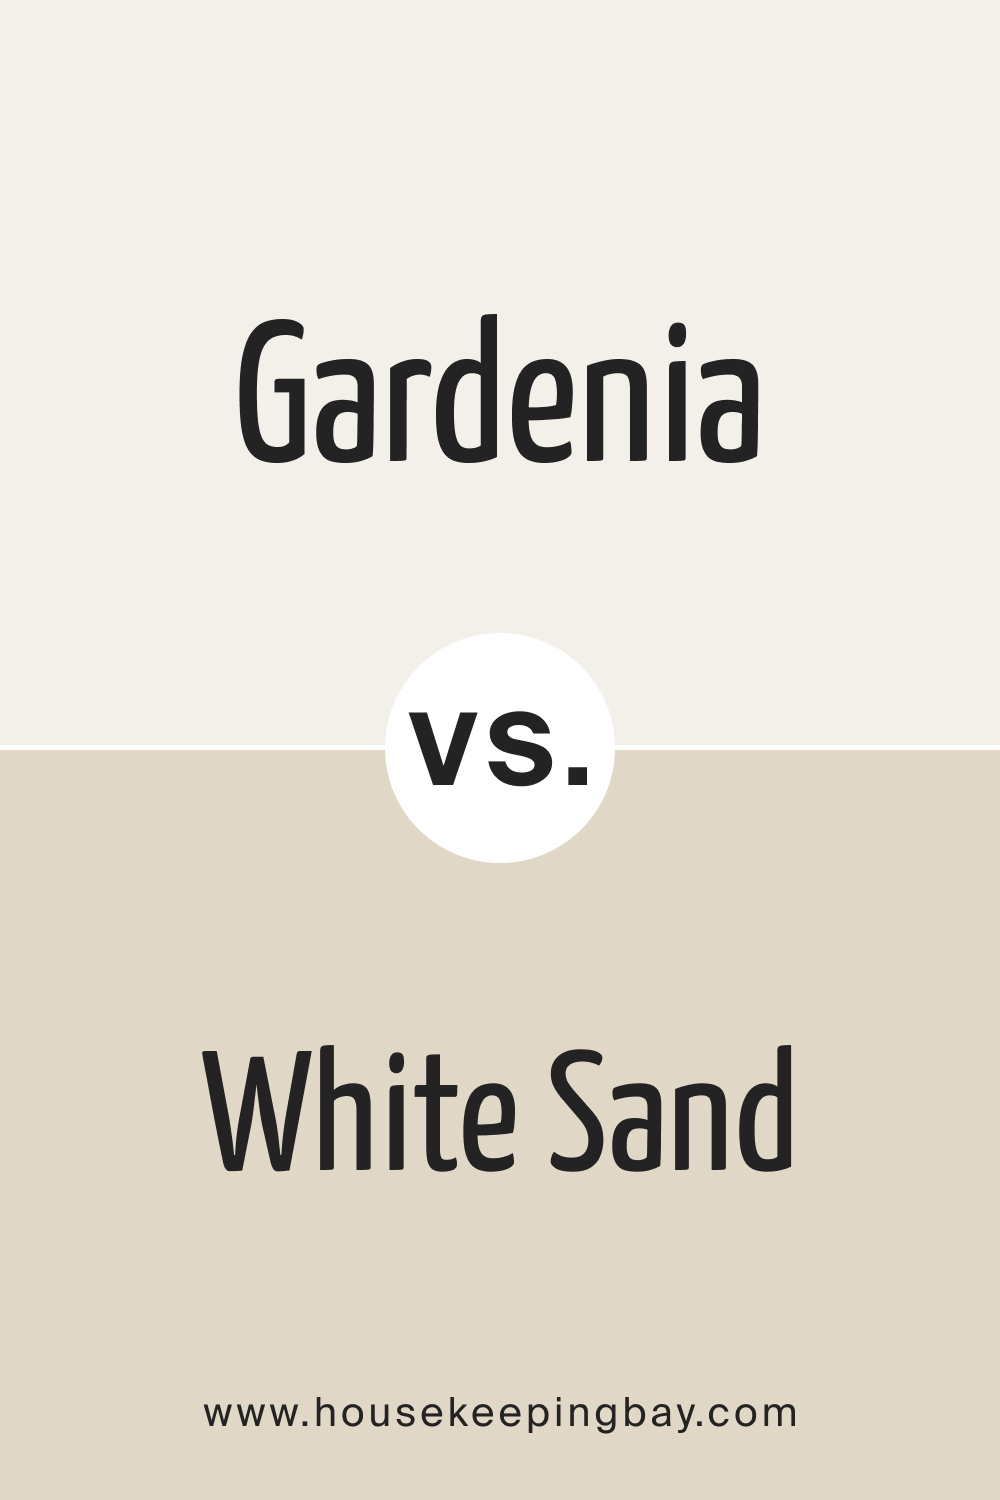 Gardenia AF 10 vs BM White Sand 964